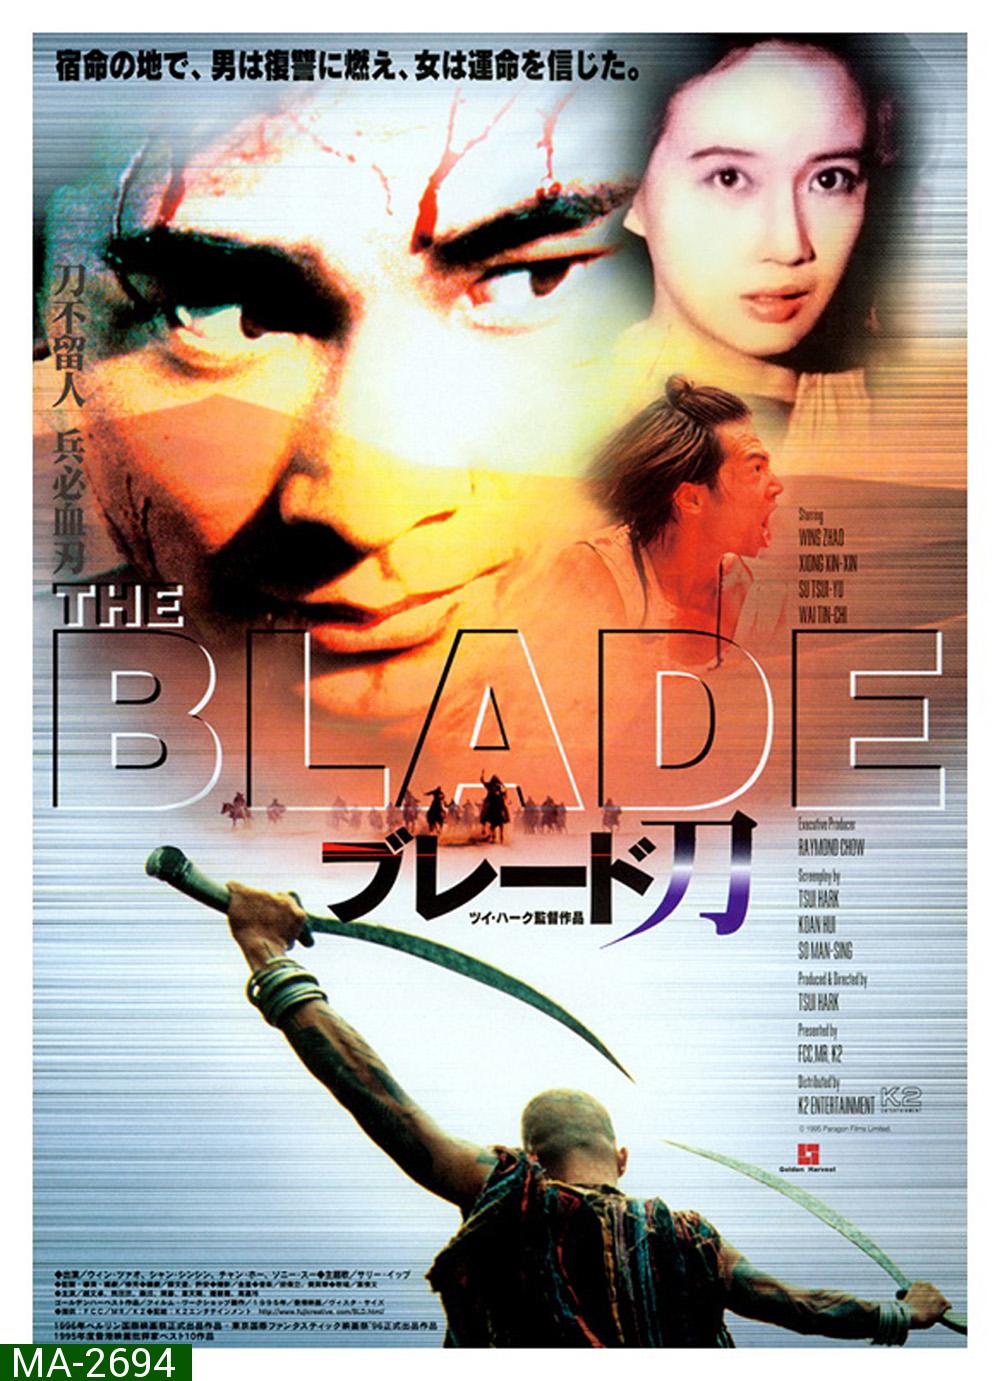 The Blade เดชไอ้ด้วน แขนหลุด ไม่หยุดแค้น (1995)